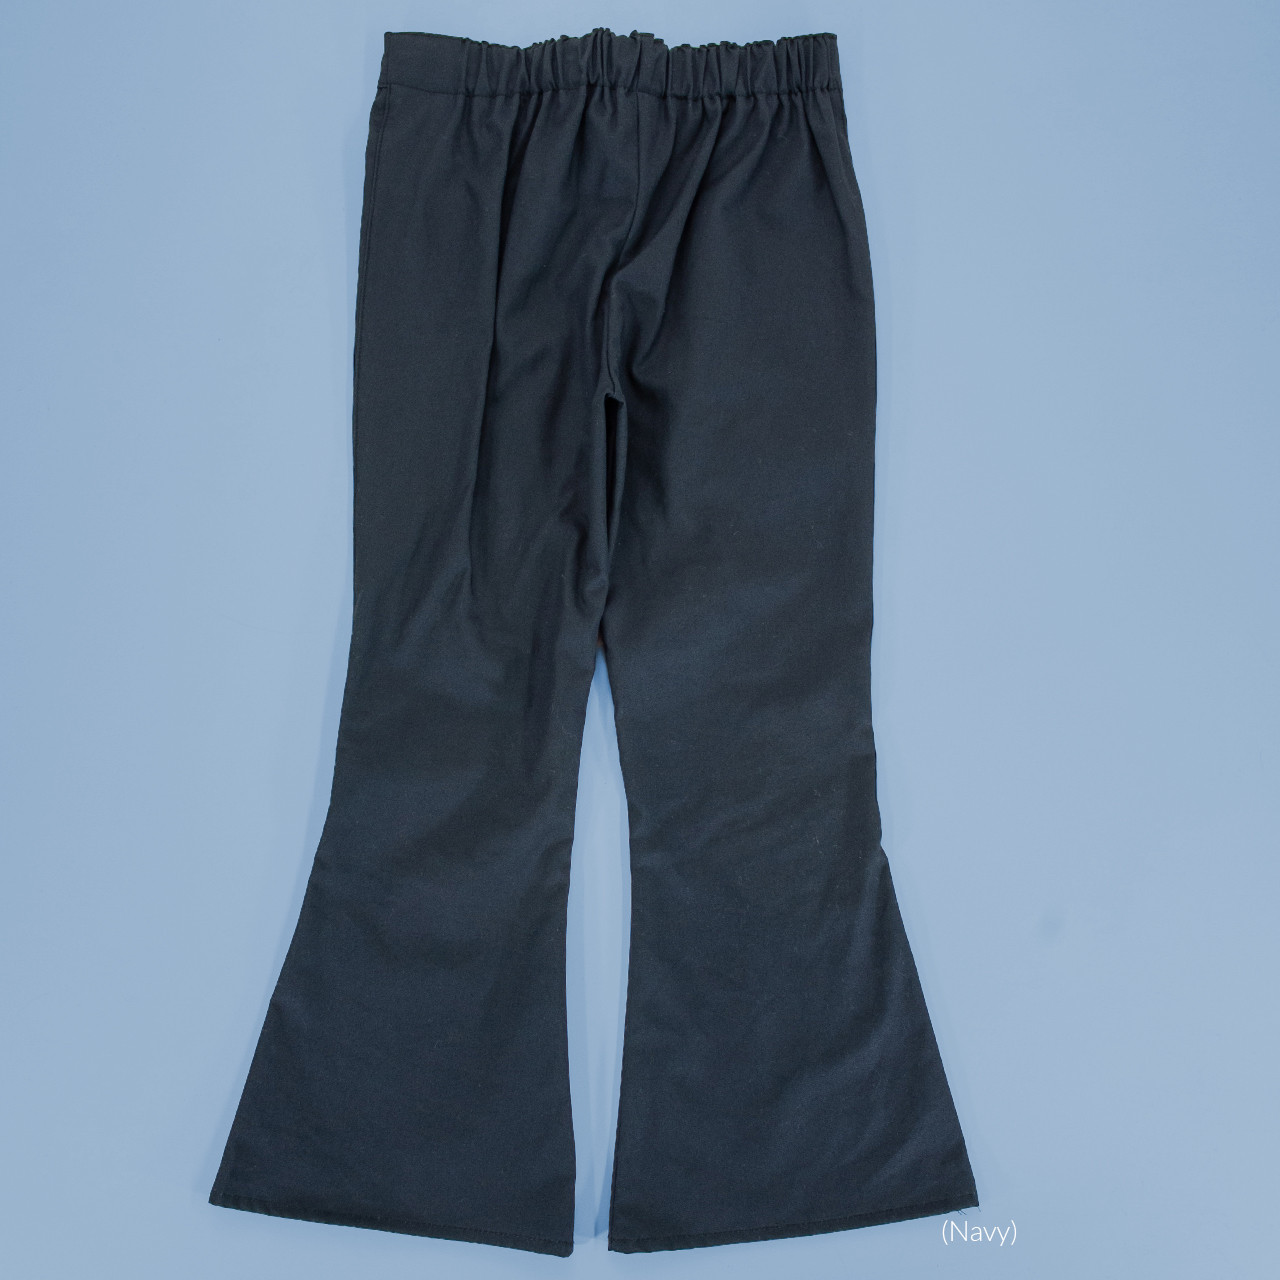 Flared Adjustable Waist Uniform Pants in Khaki